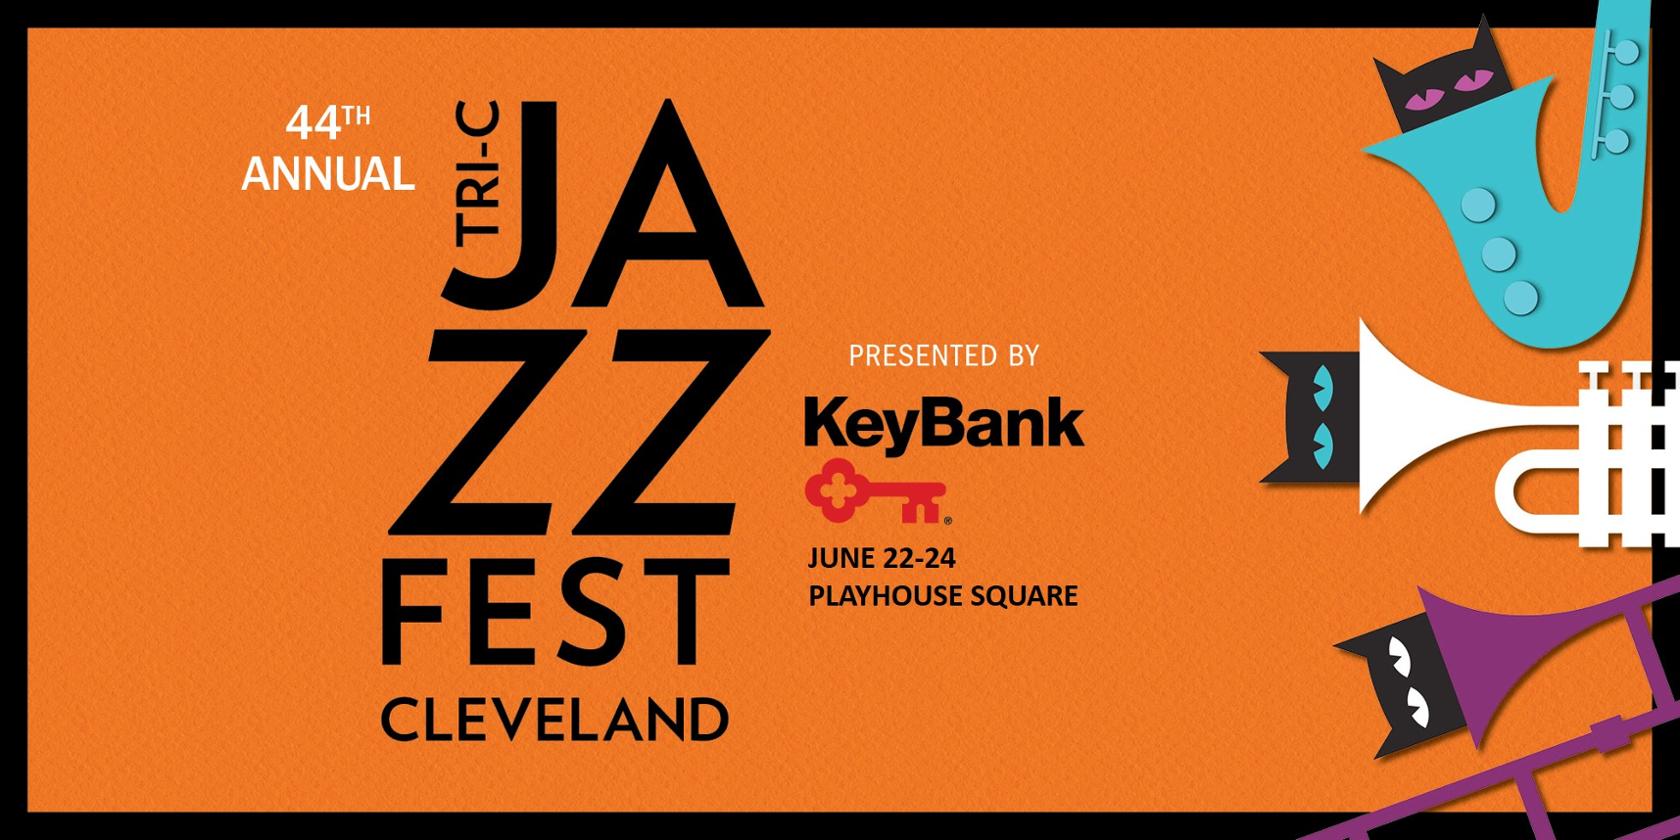 Jazz Fest